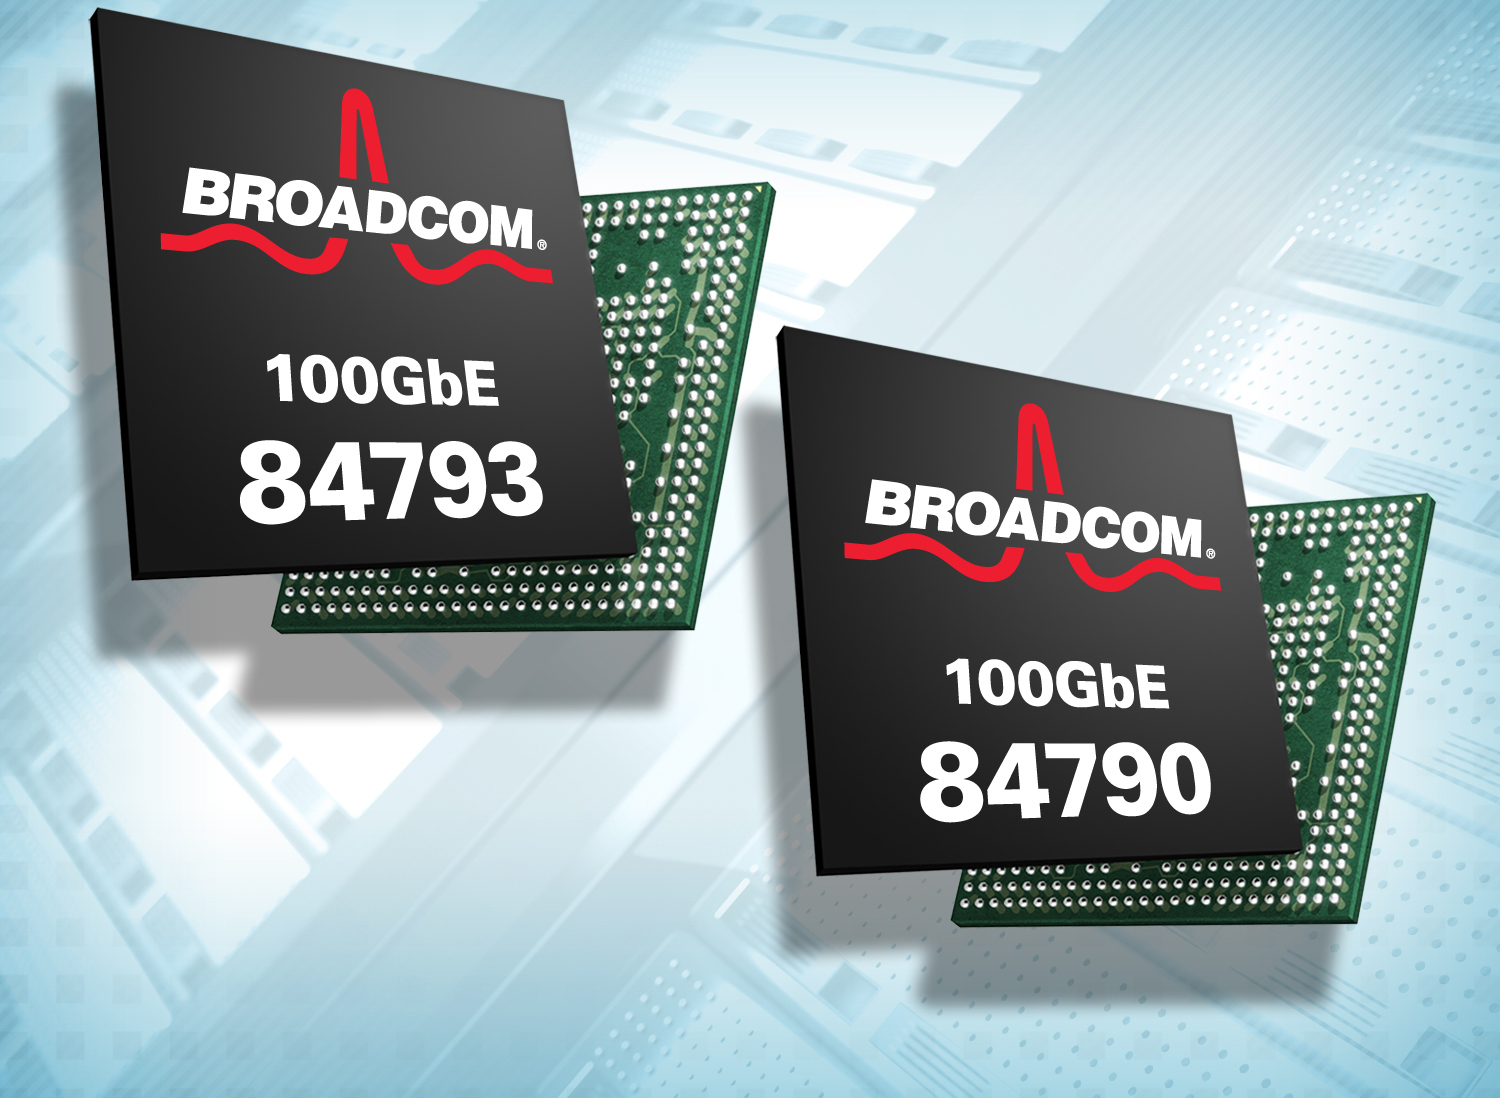 Broadcom startet Aktienrueckkaufprogramm ueber 12 Milliarden Dollar - Bild 1